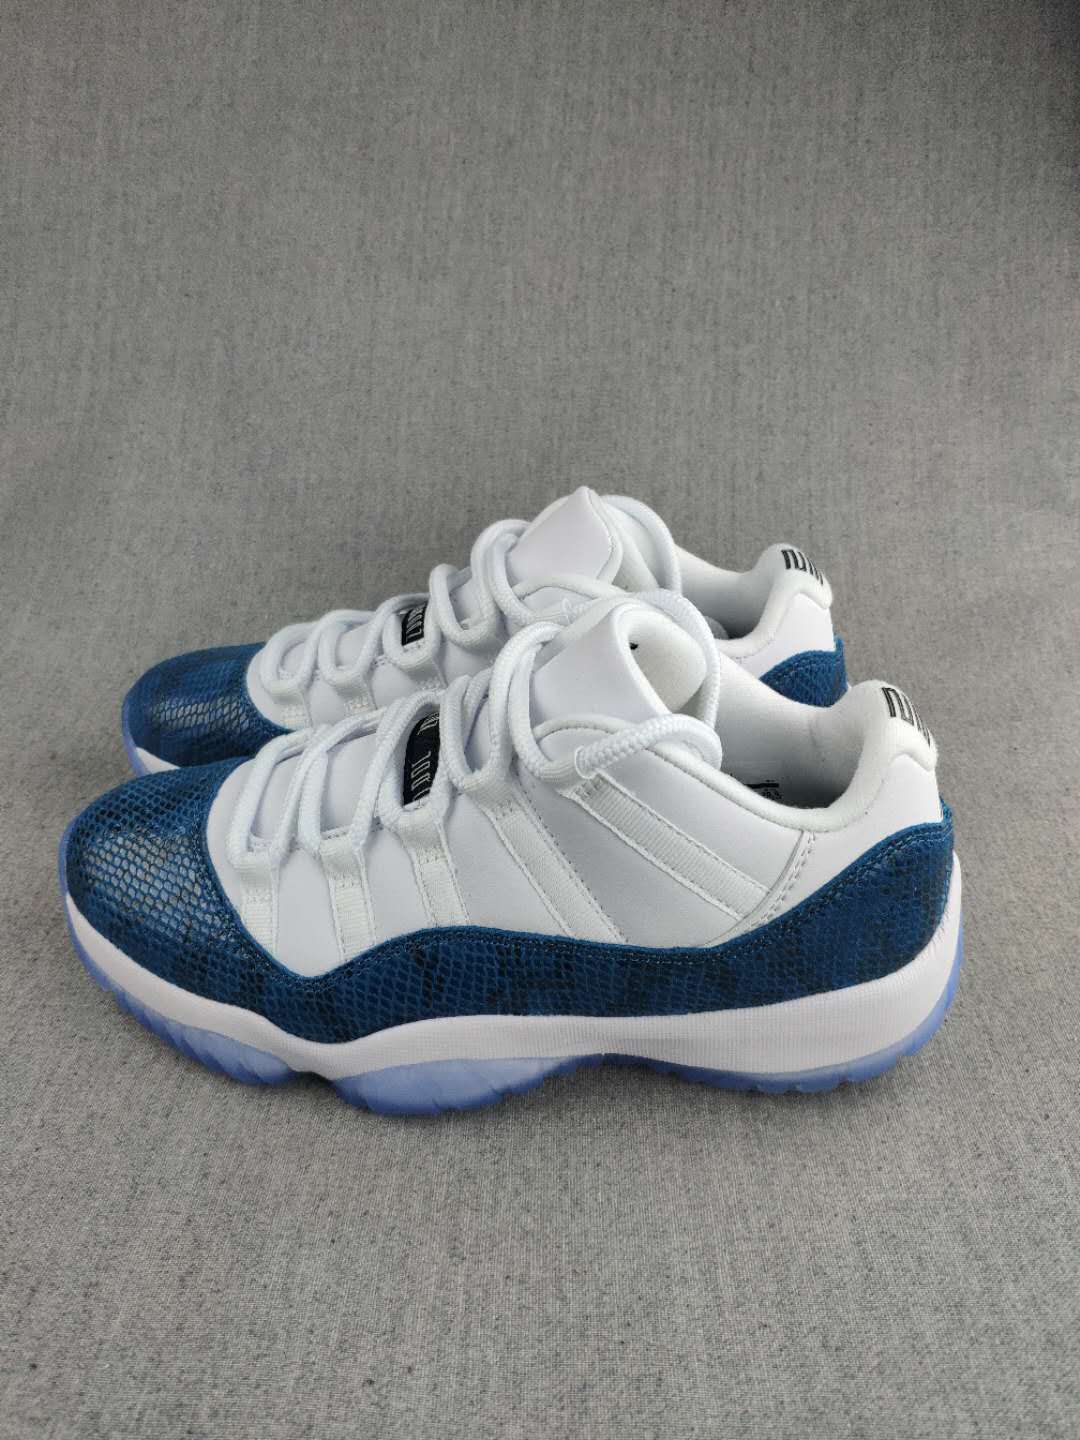 Air Jordan 11 Low SnakeSkin White Blue Shoes